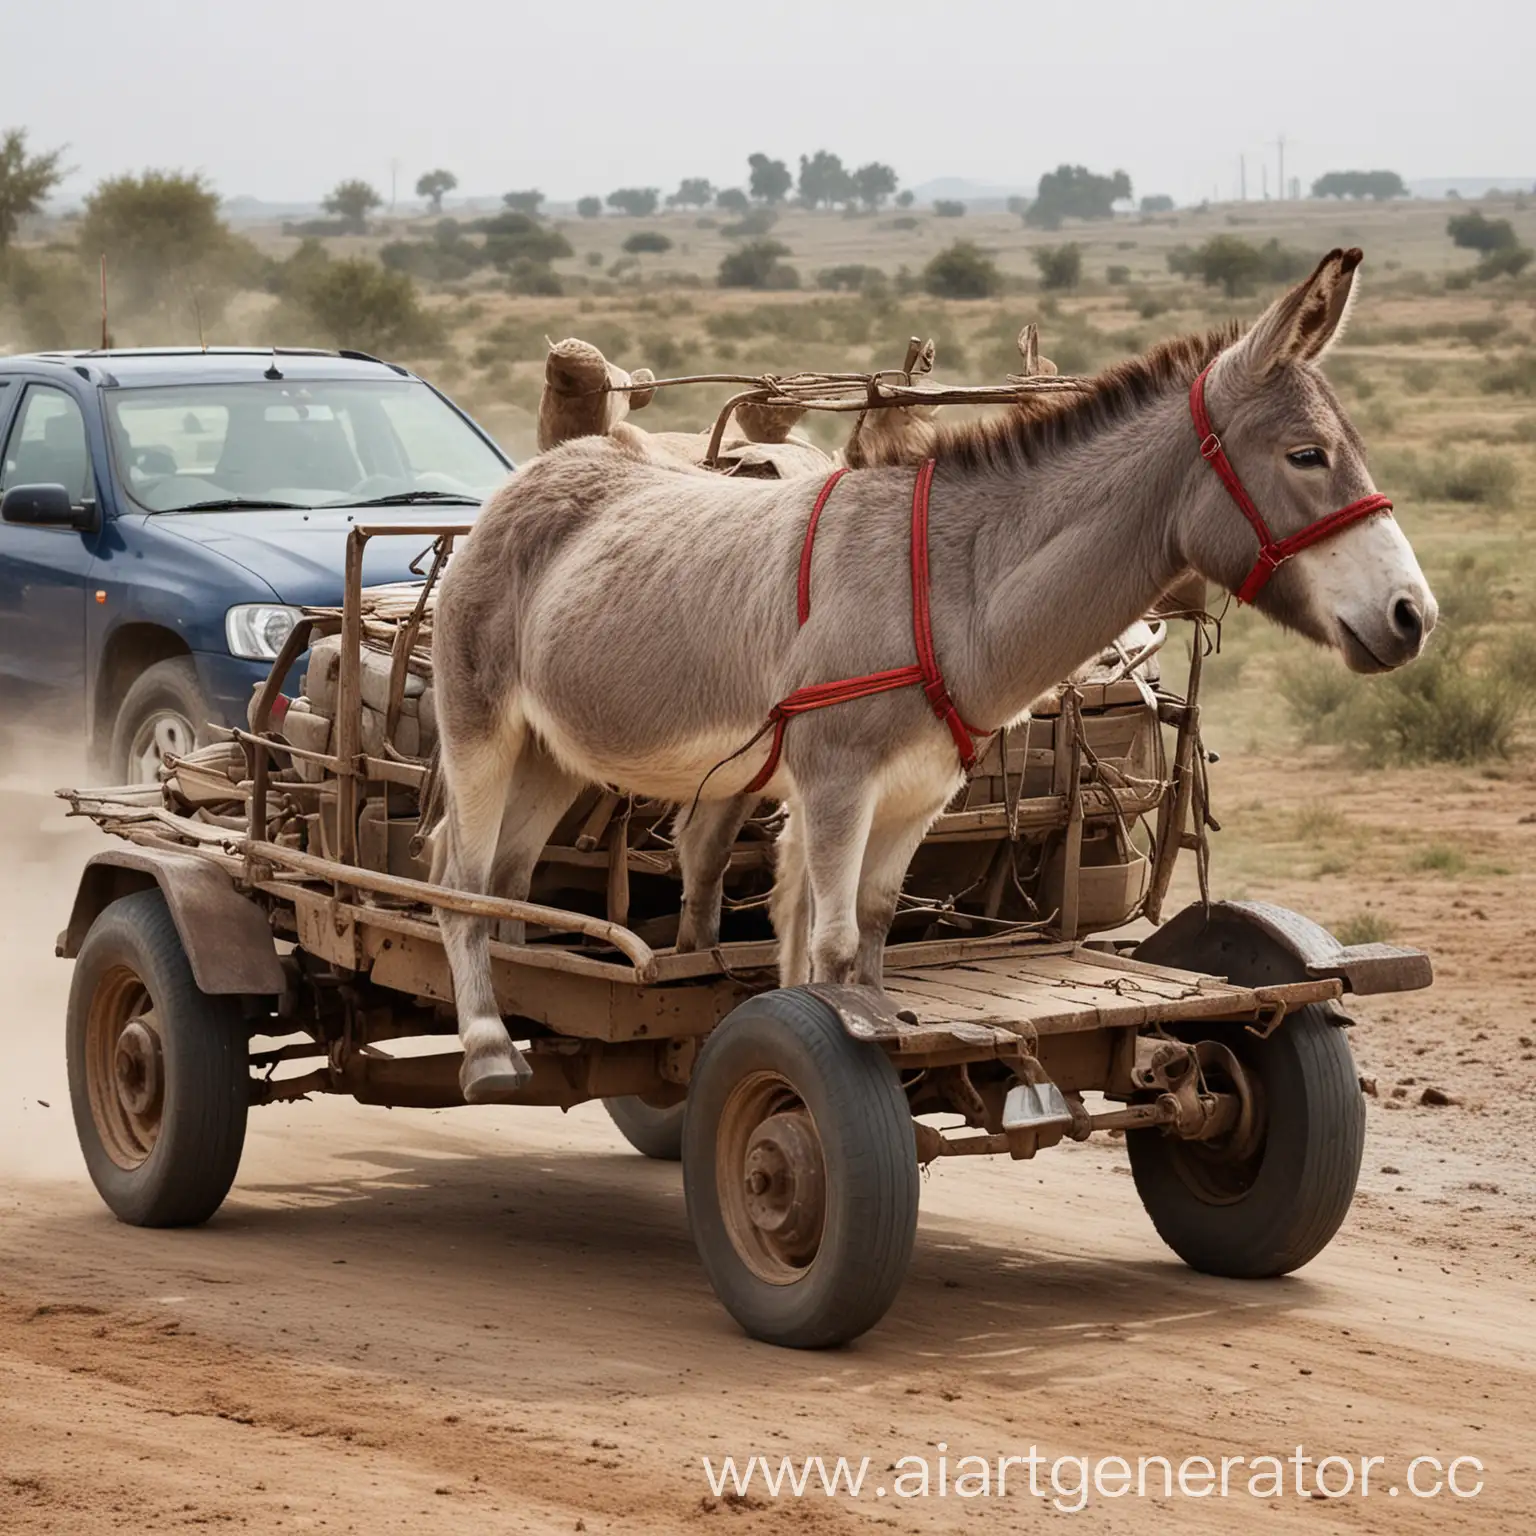 car a donkey drayving

